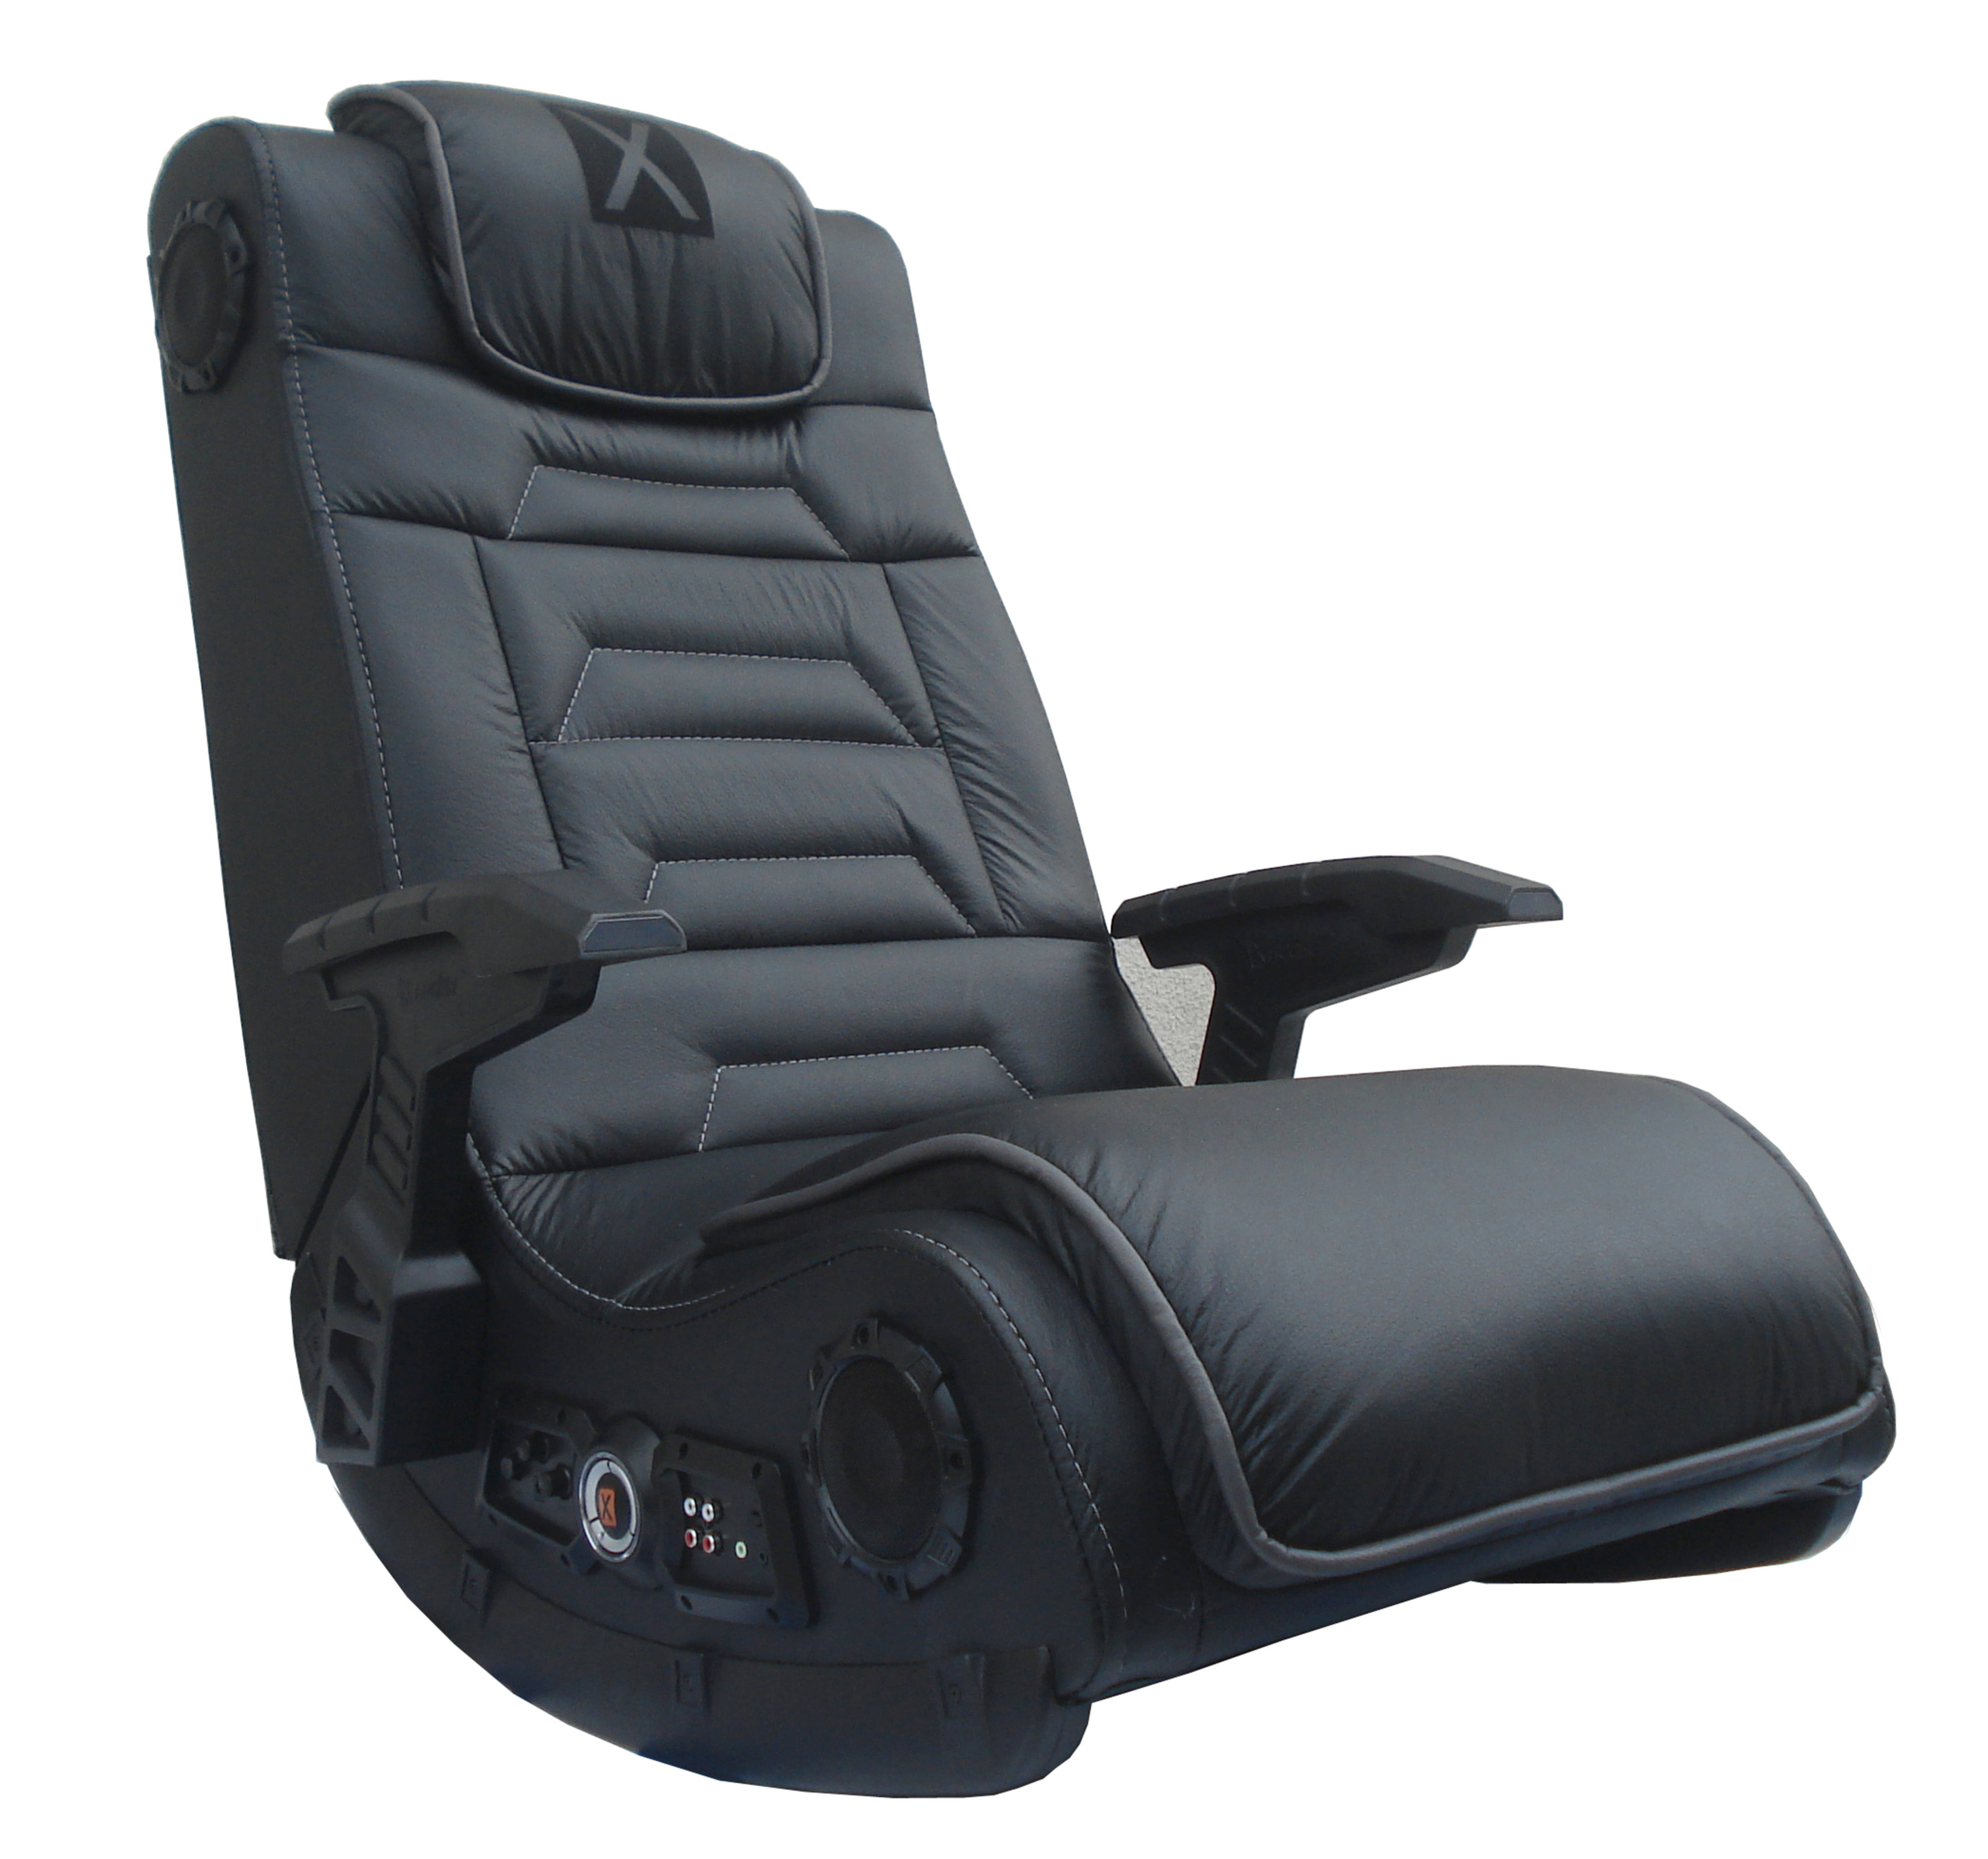 X Rocker 51259 Pro H3 4.1 Audio Gaming Chair, Wireless